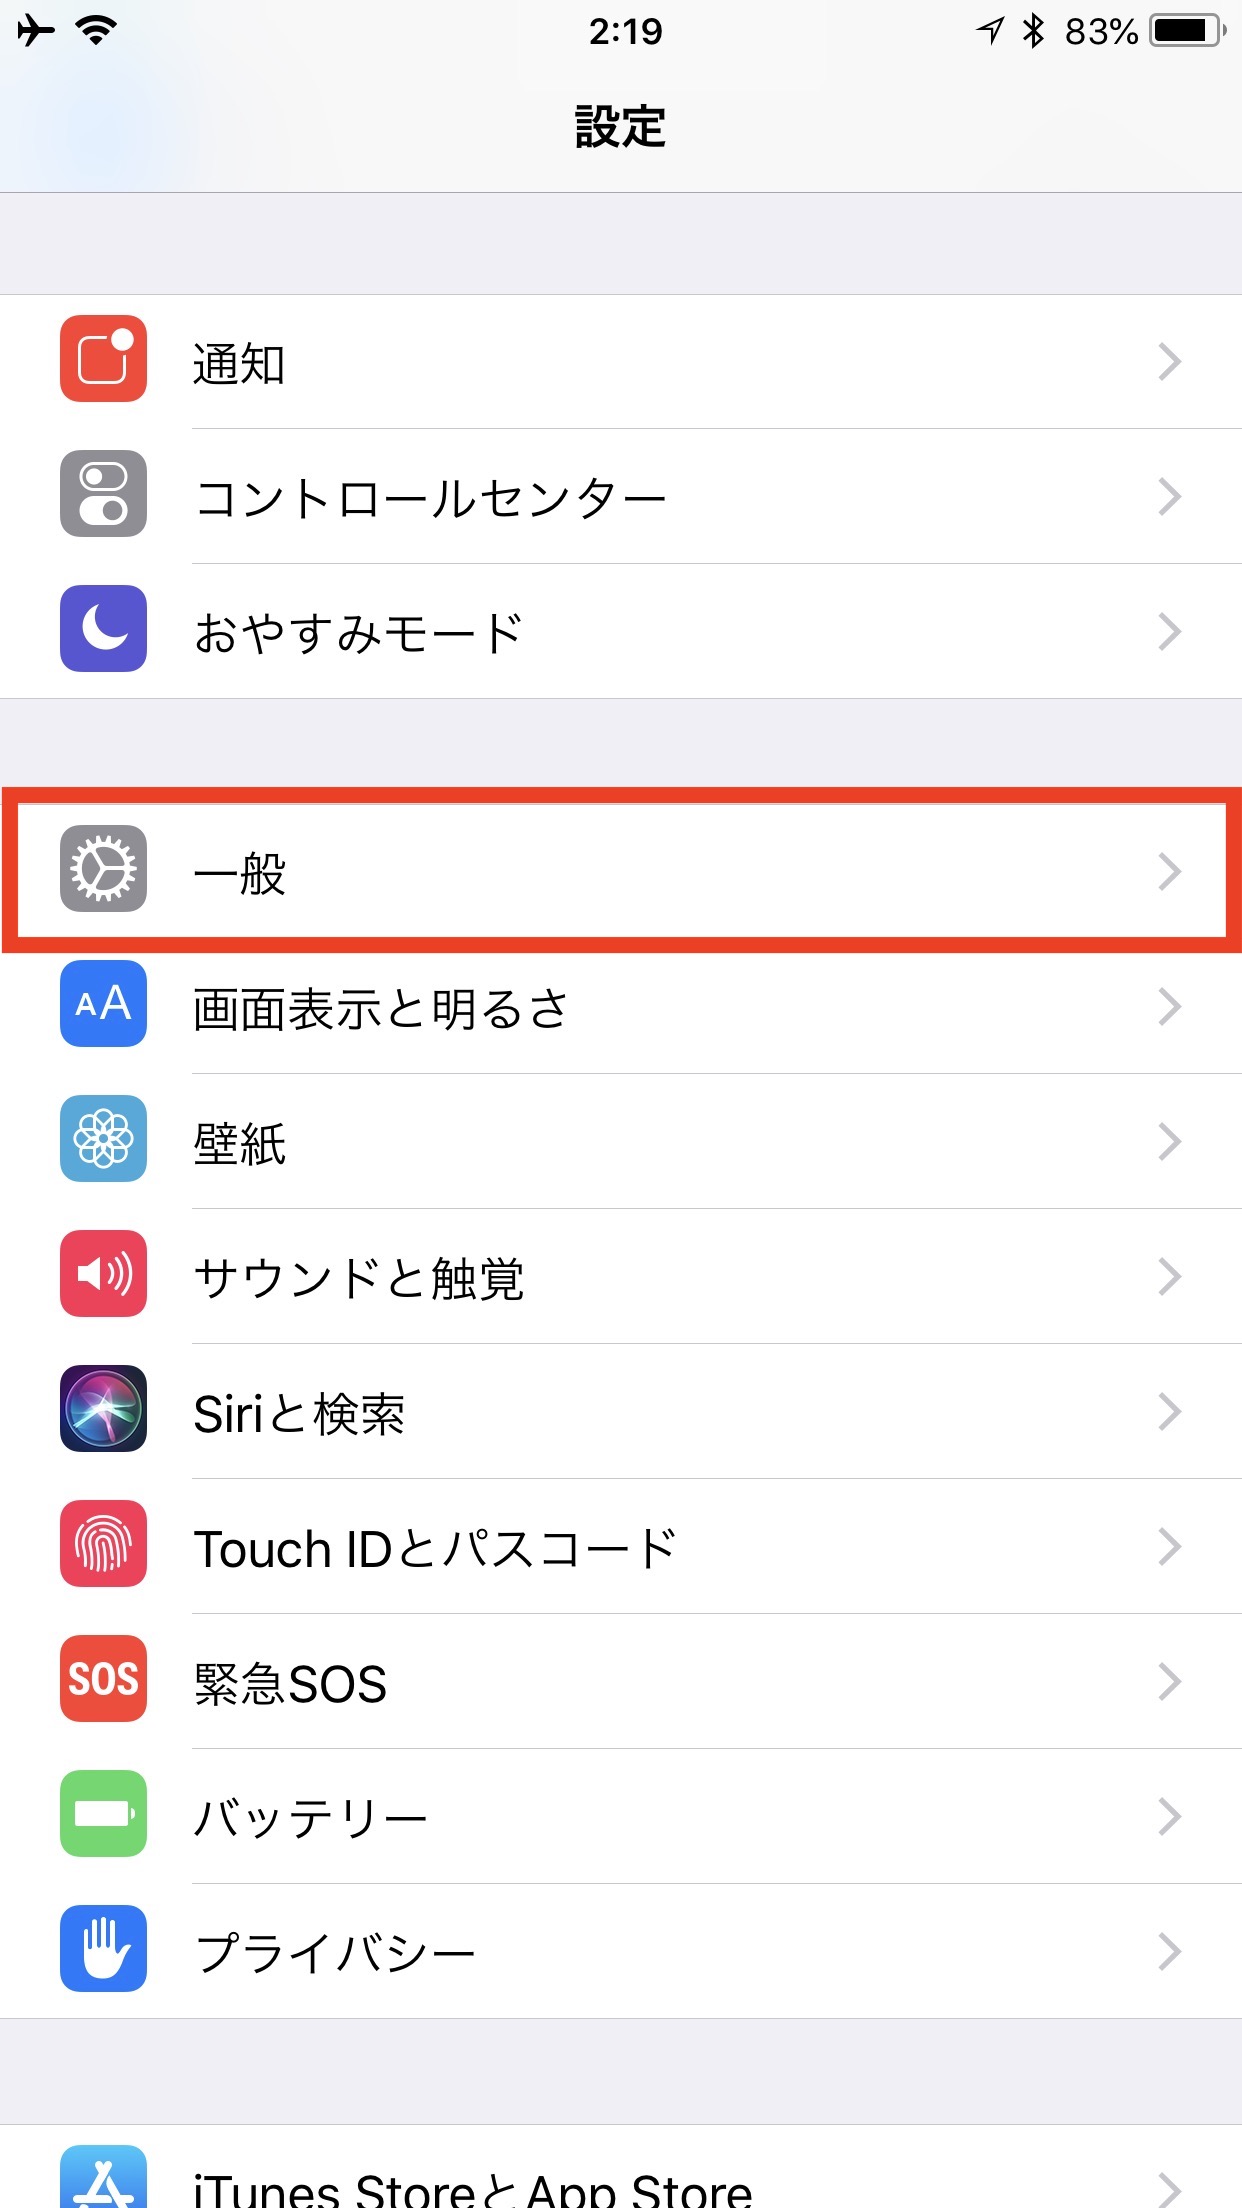 「iOS 11.4.1」のアップデート方法